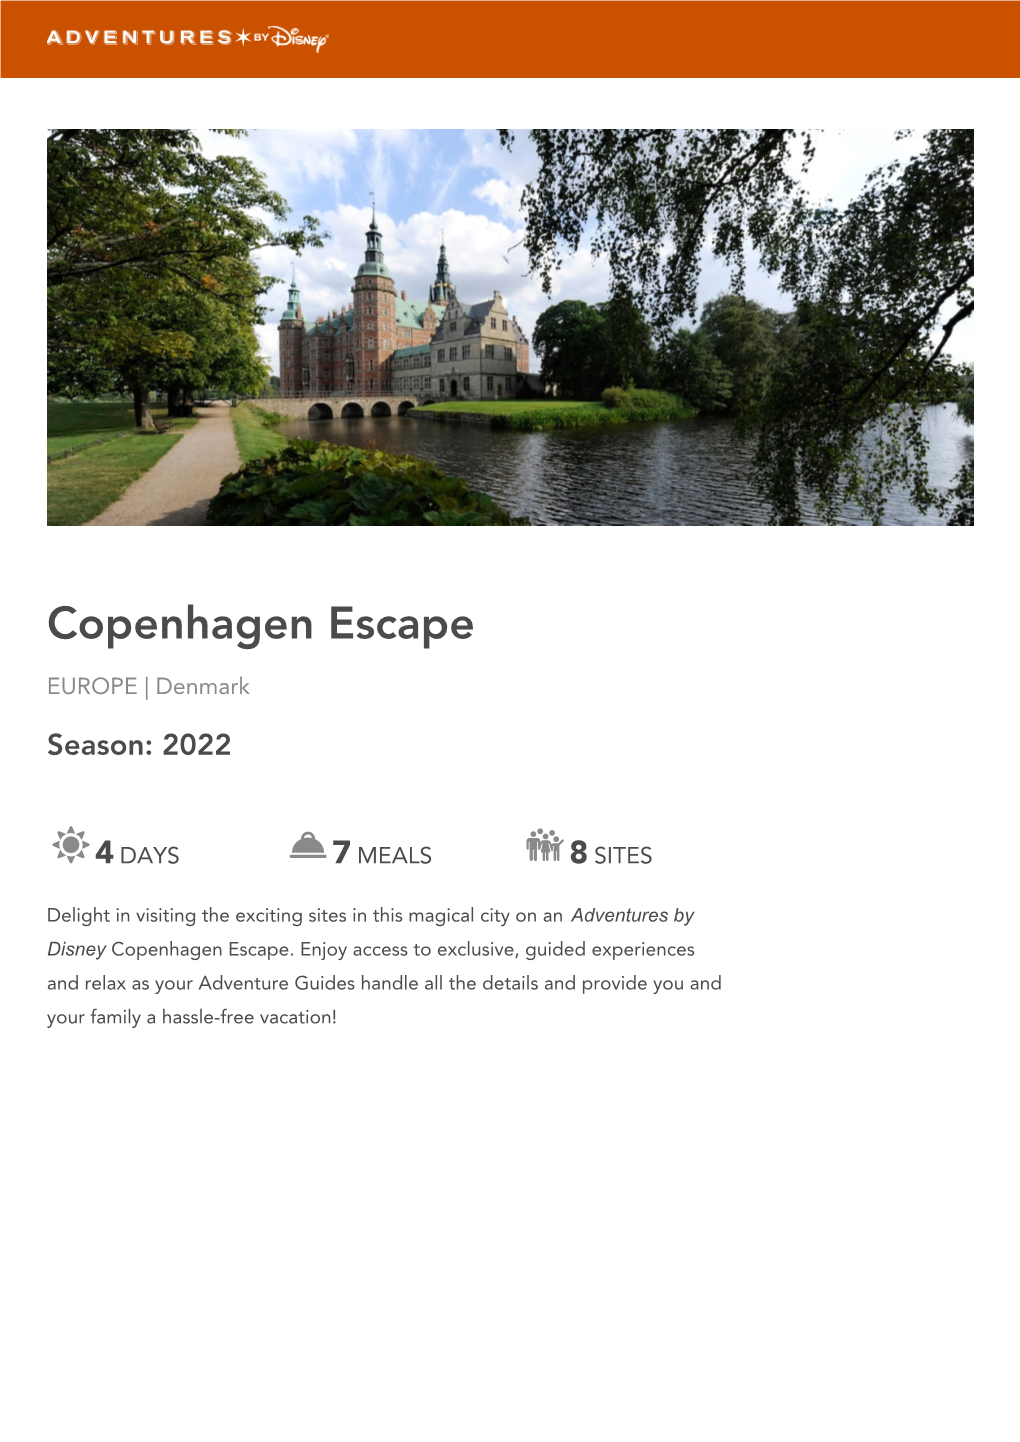 COPENHAGEN ESCAPE Europe | Denmark